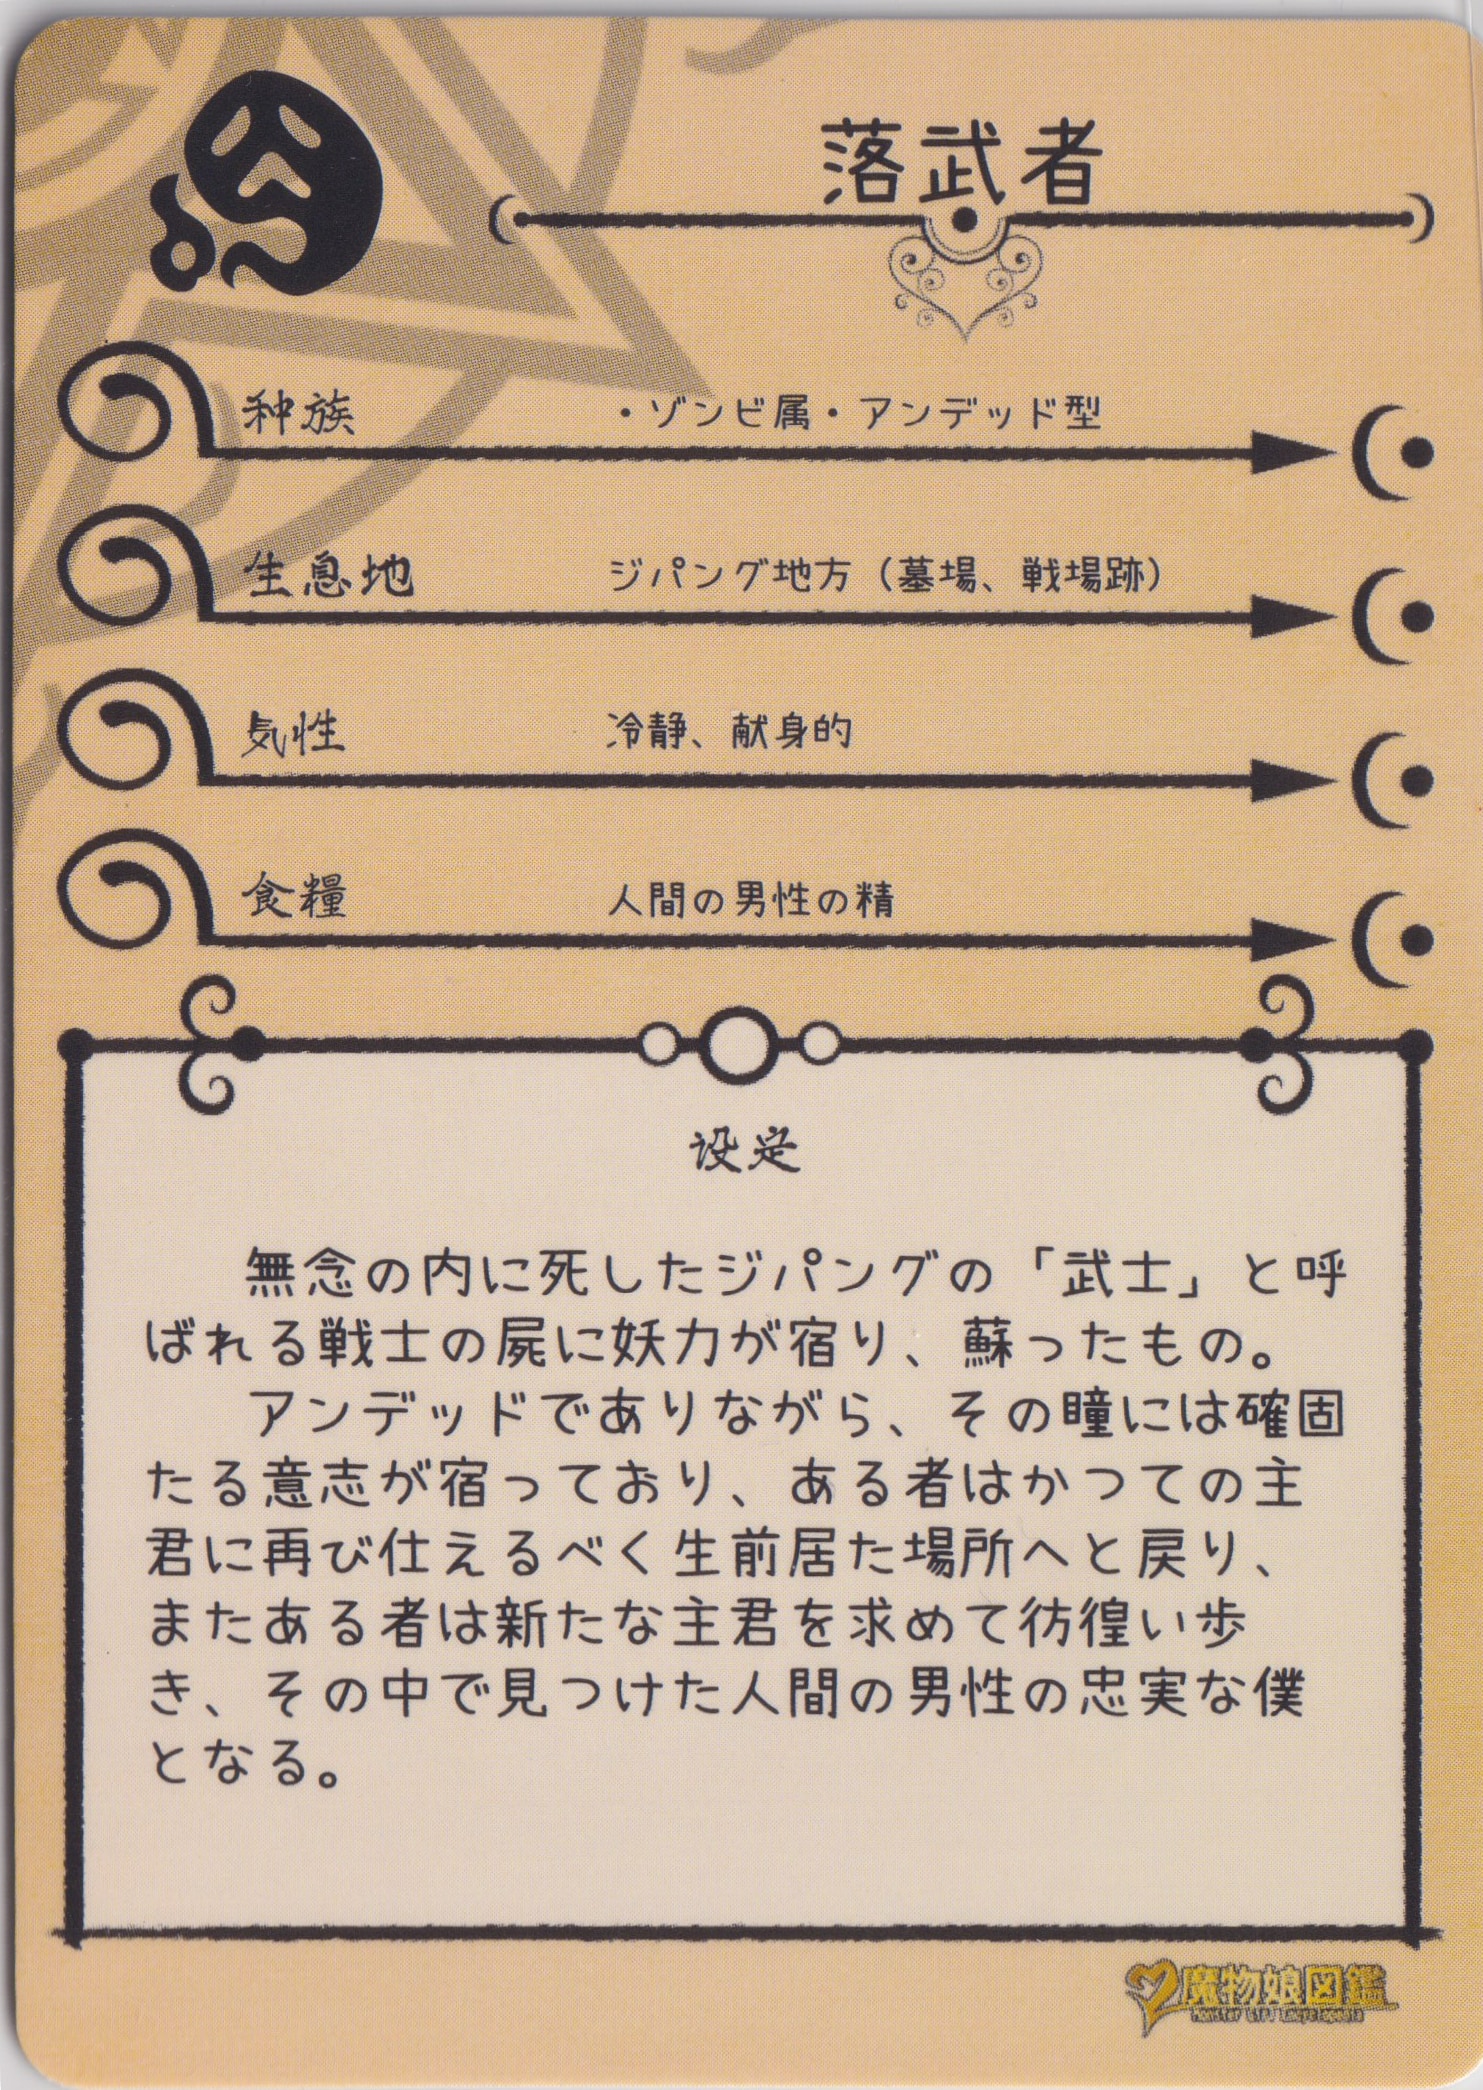 Monster Girl Encyclopedia: Ochimusha MG-092 - Trading Card Archives